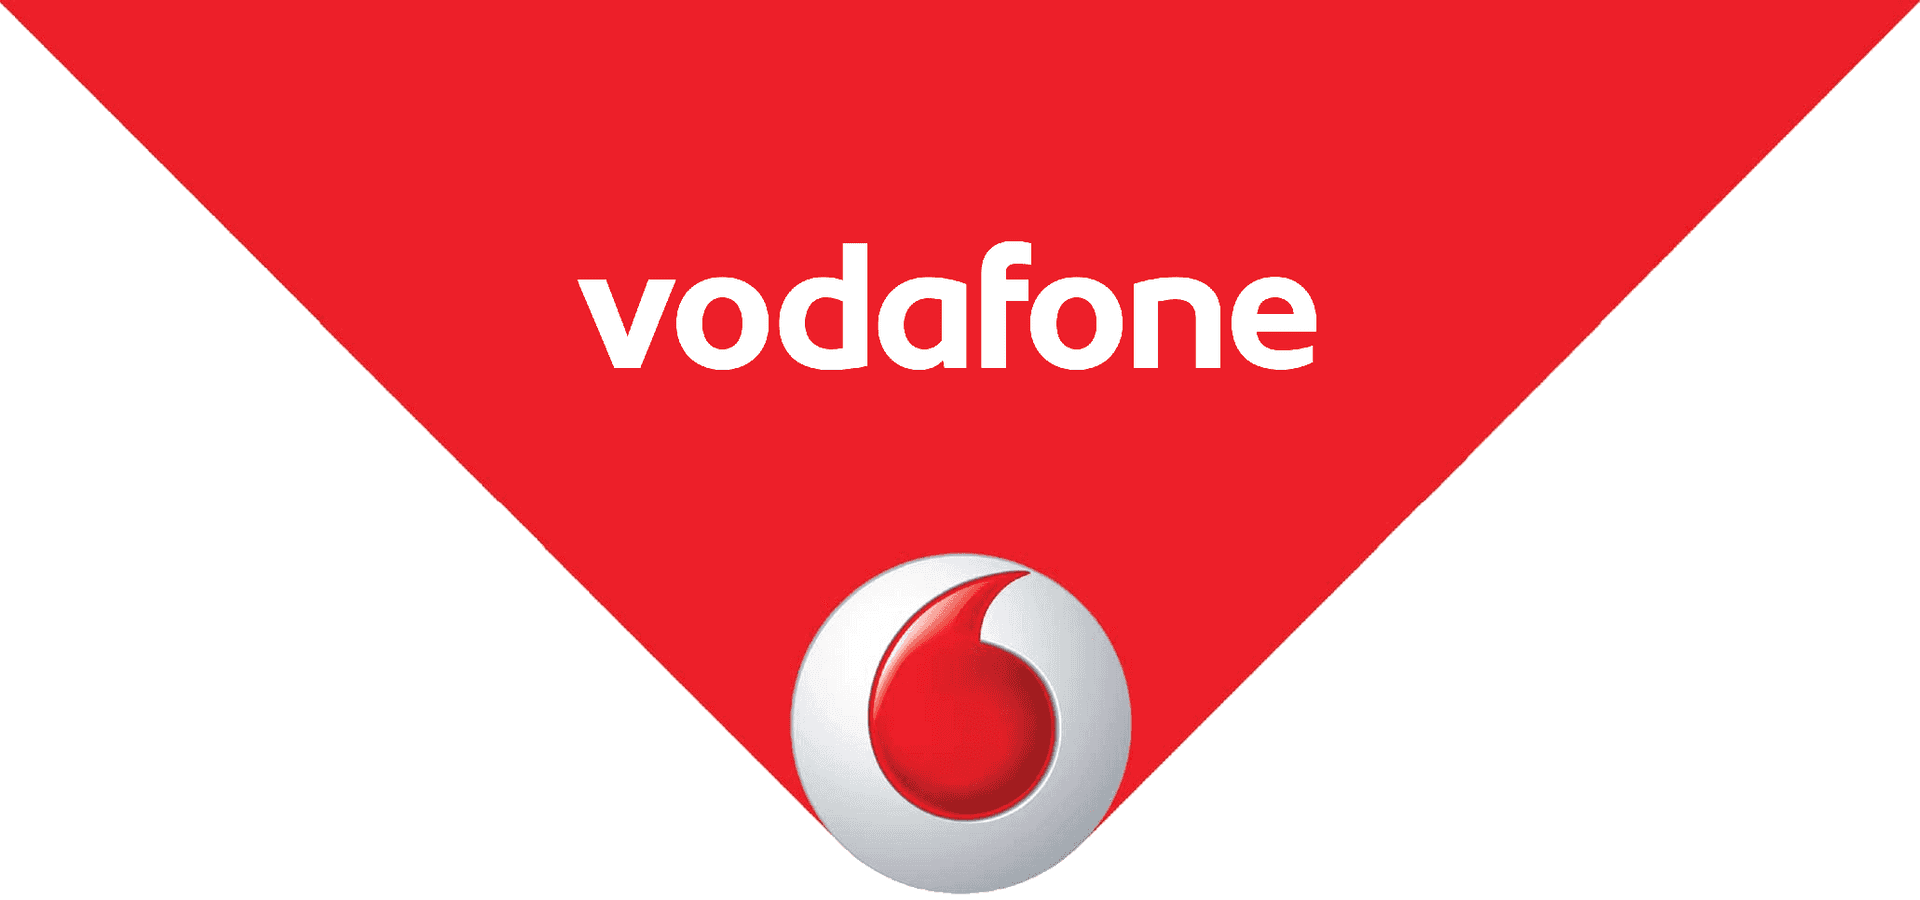 Vodafone Logo Red Background PNG image